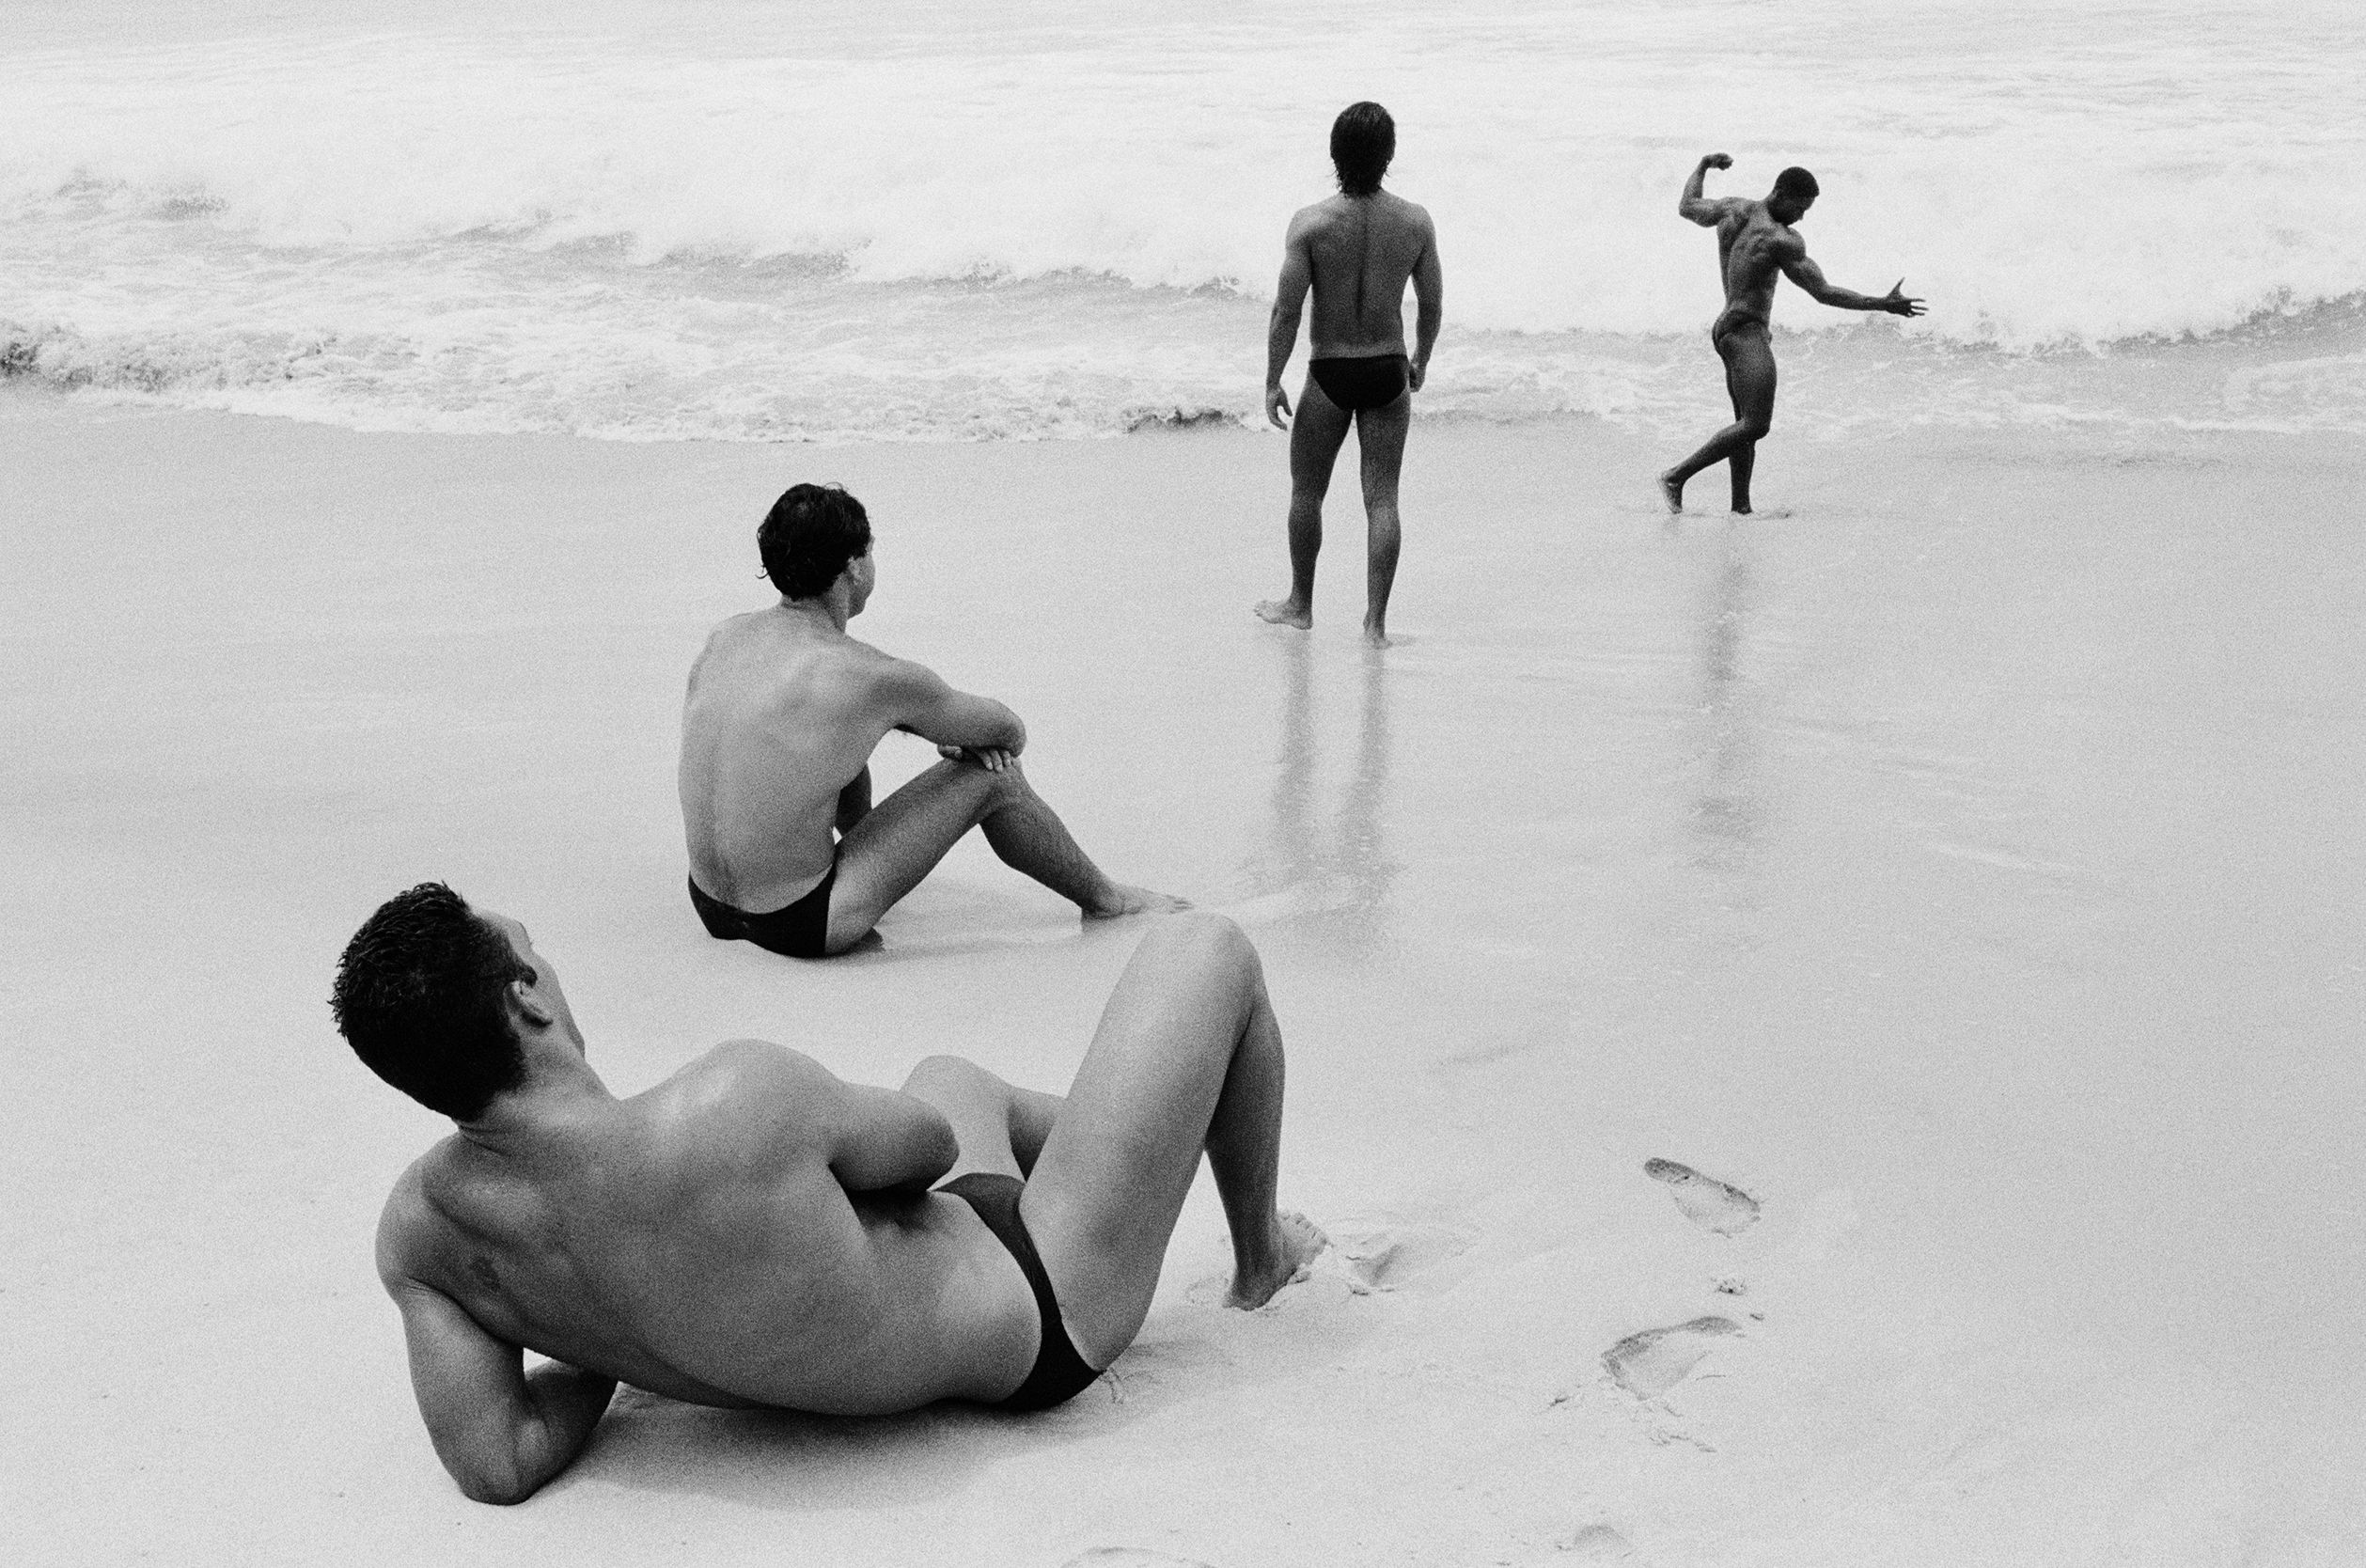 anybunny sunita amateur nude beach video